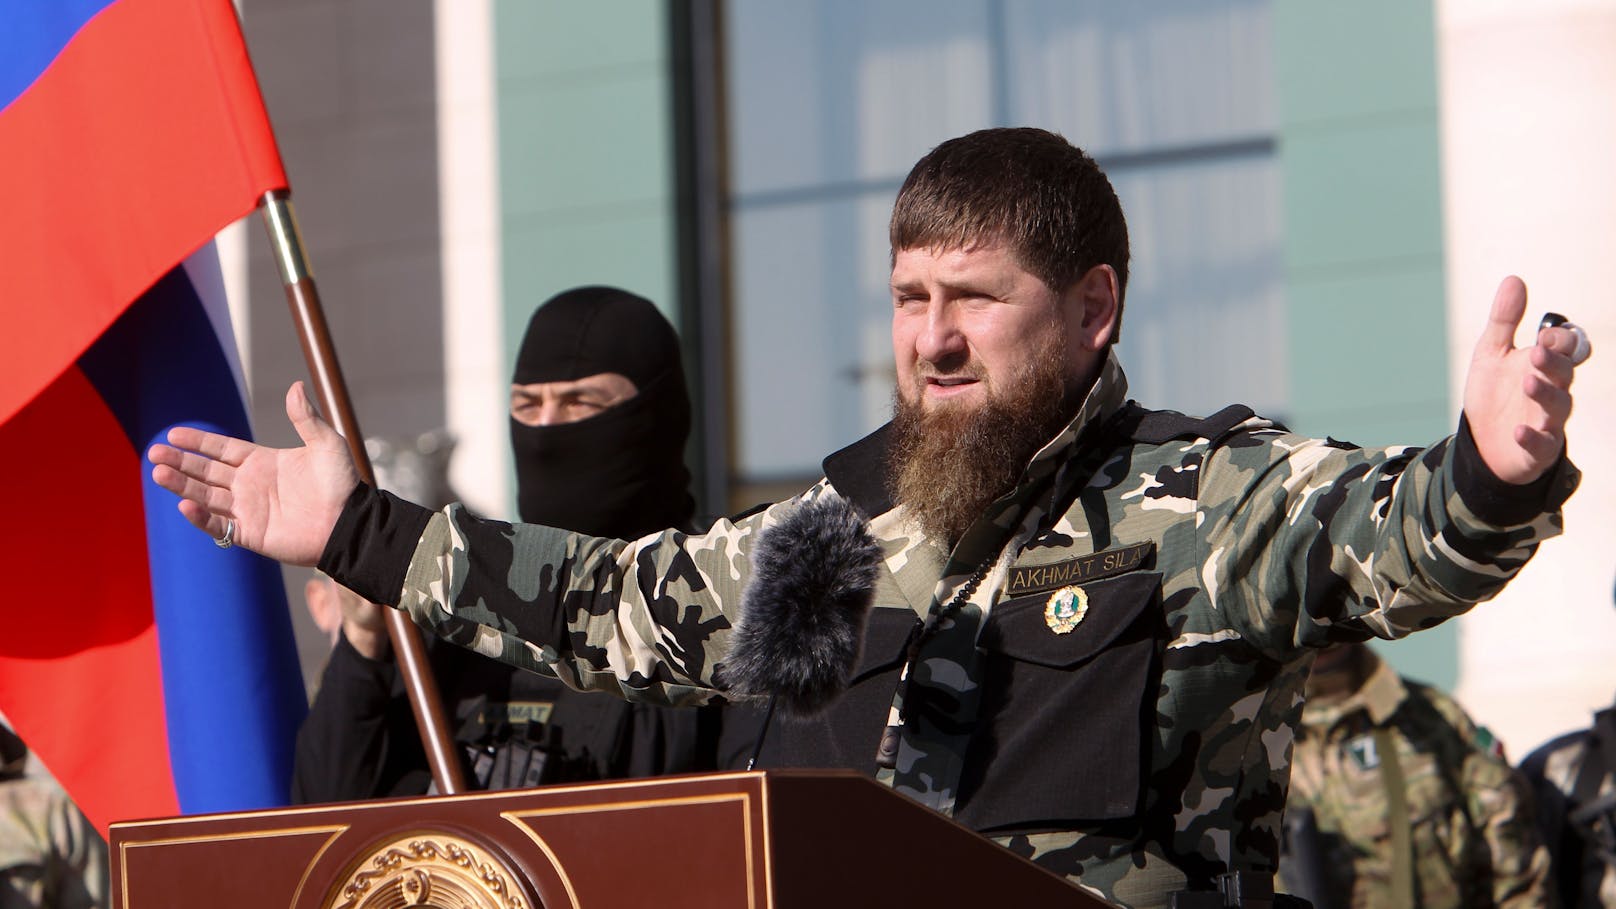 Ramsan Kadyrow gilt als grausam brutaler Diktator.&nbsp;